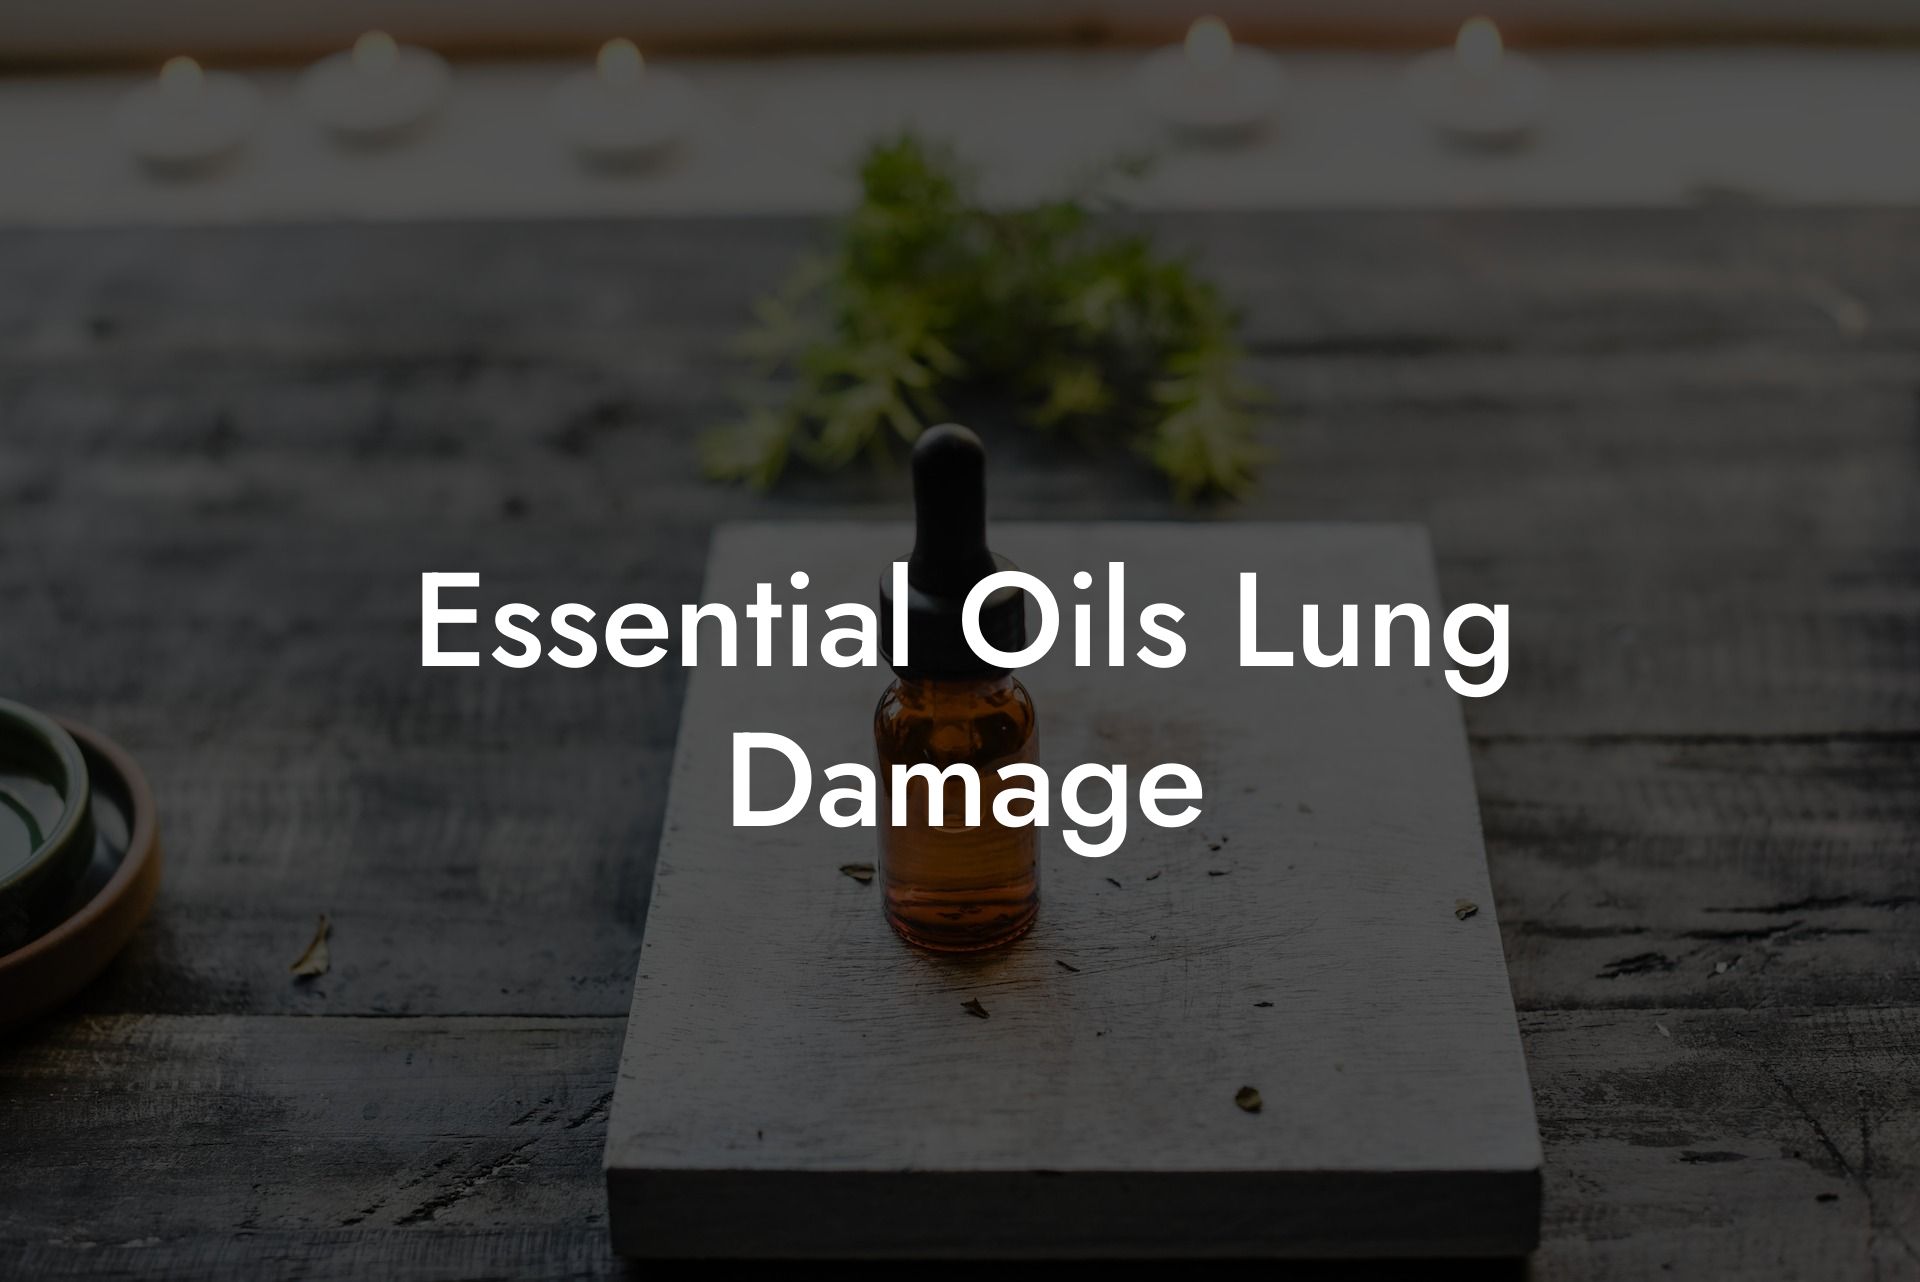 Essential Oils Lung Damage